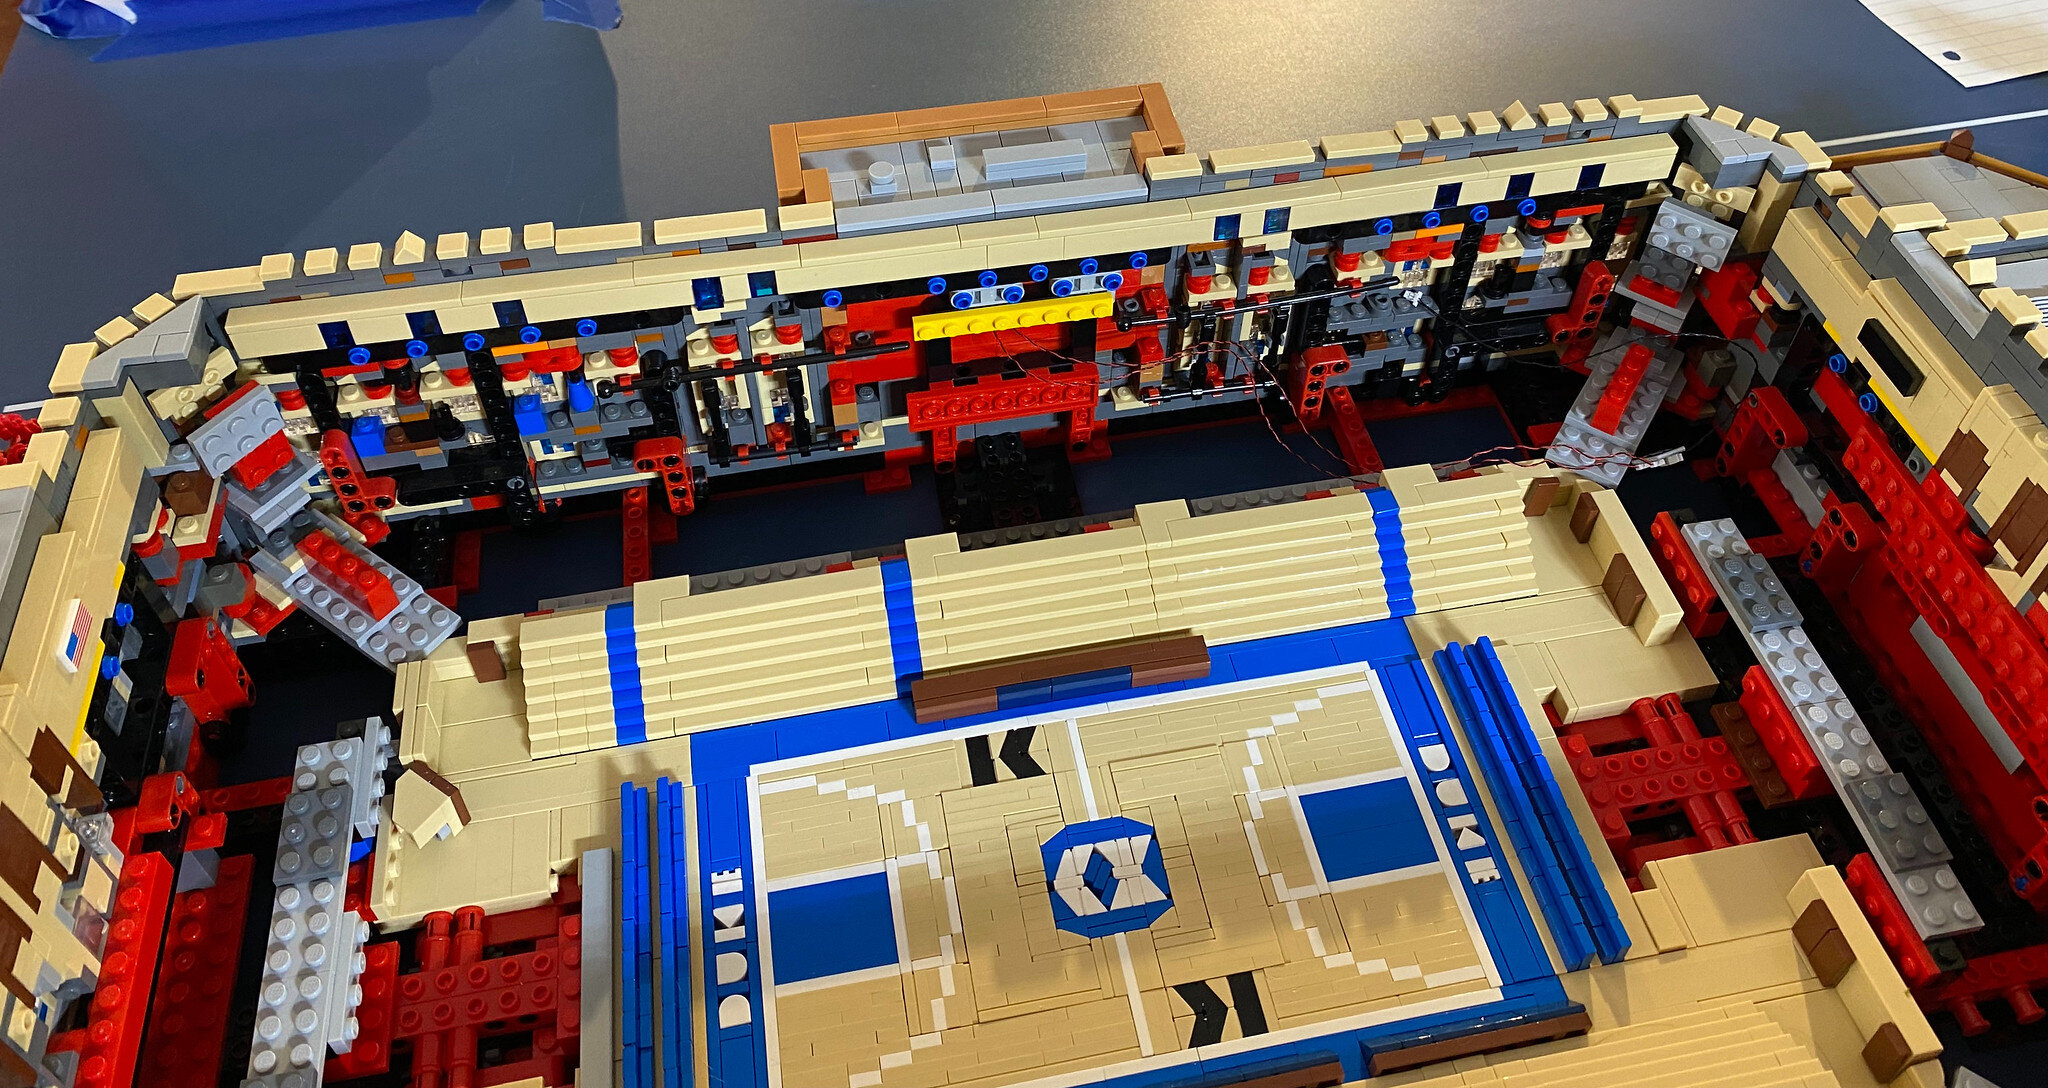 Building Basketball: Duke's Cameron Indoor Stadium in LEGO - BrickNerd -  All things LEGO and the LEGO fan community